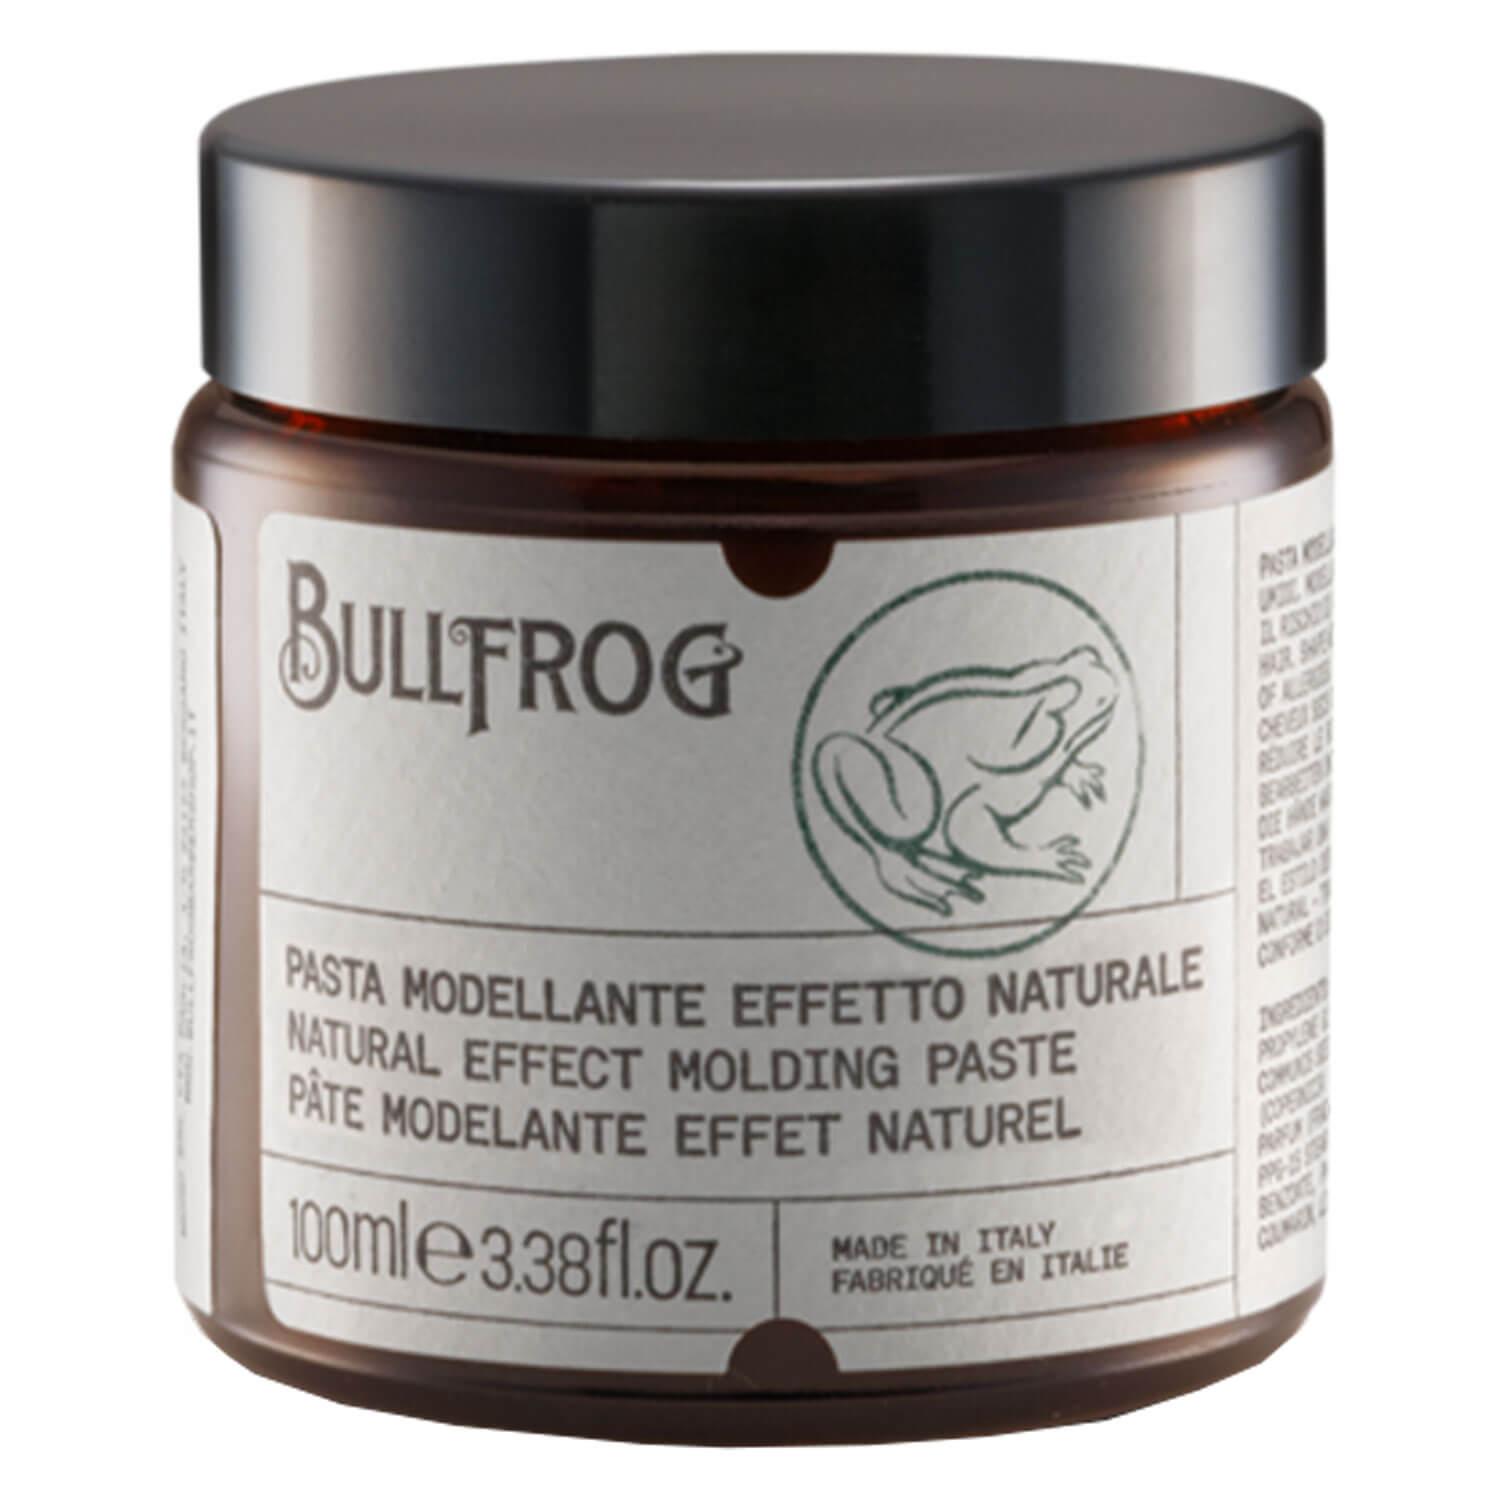 BULLFROG - Natural Effect Molding Paste